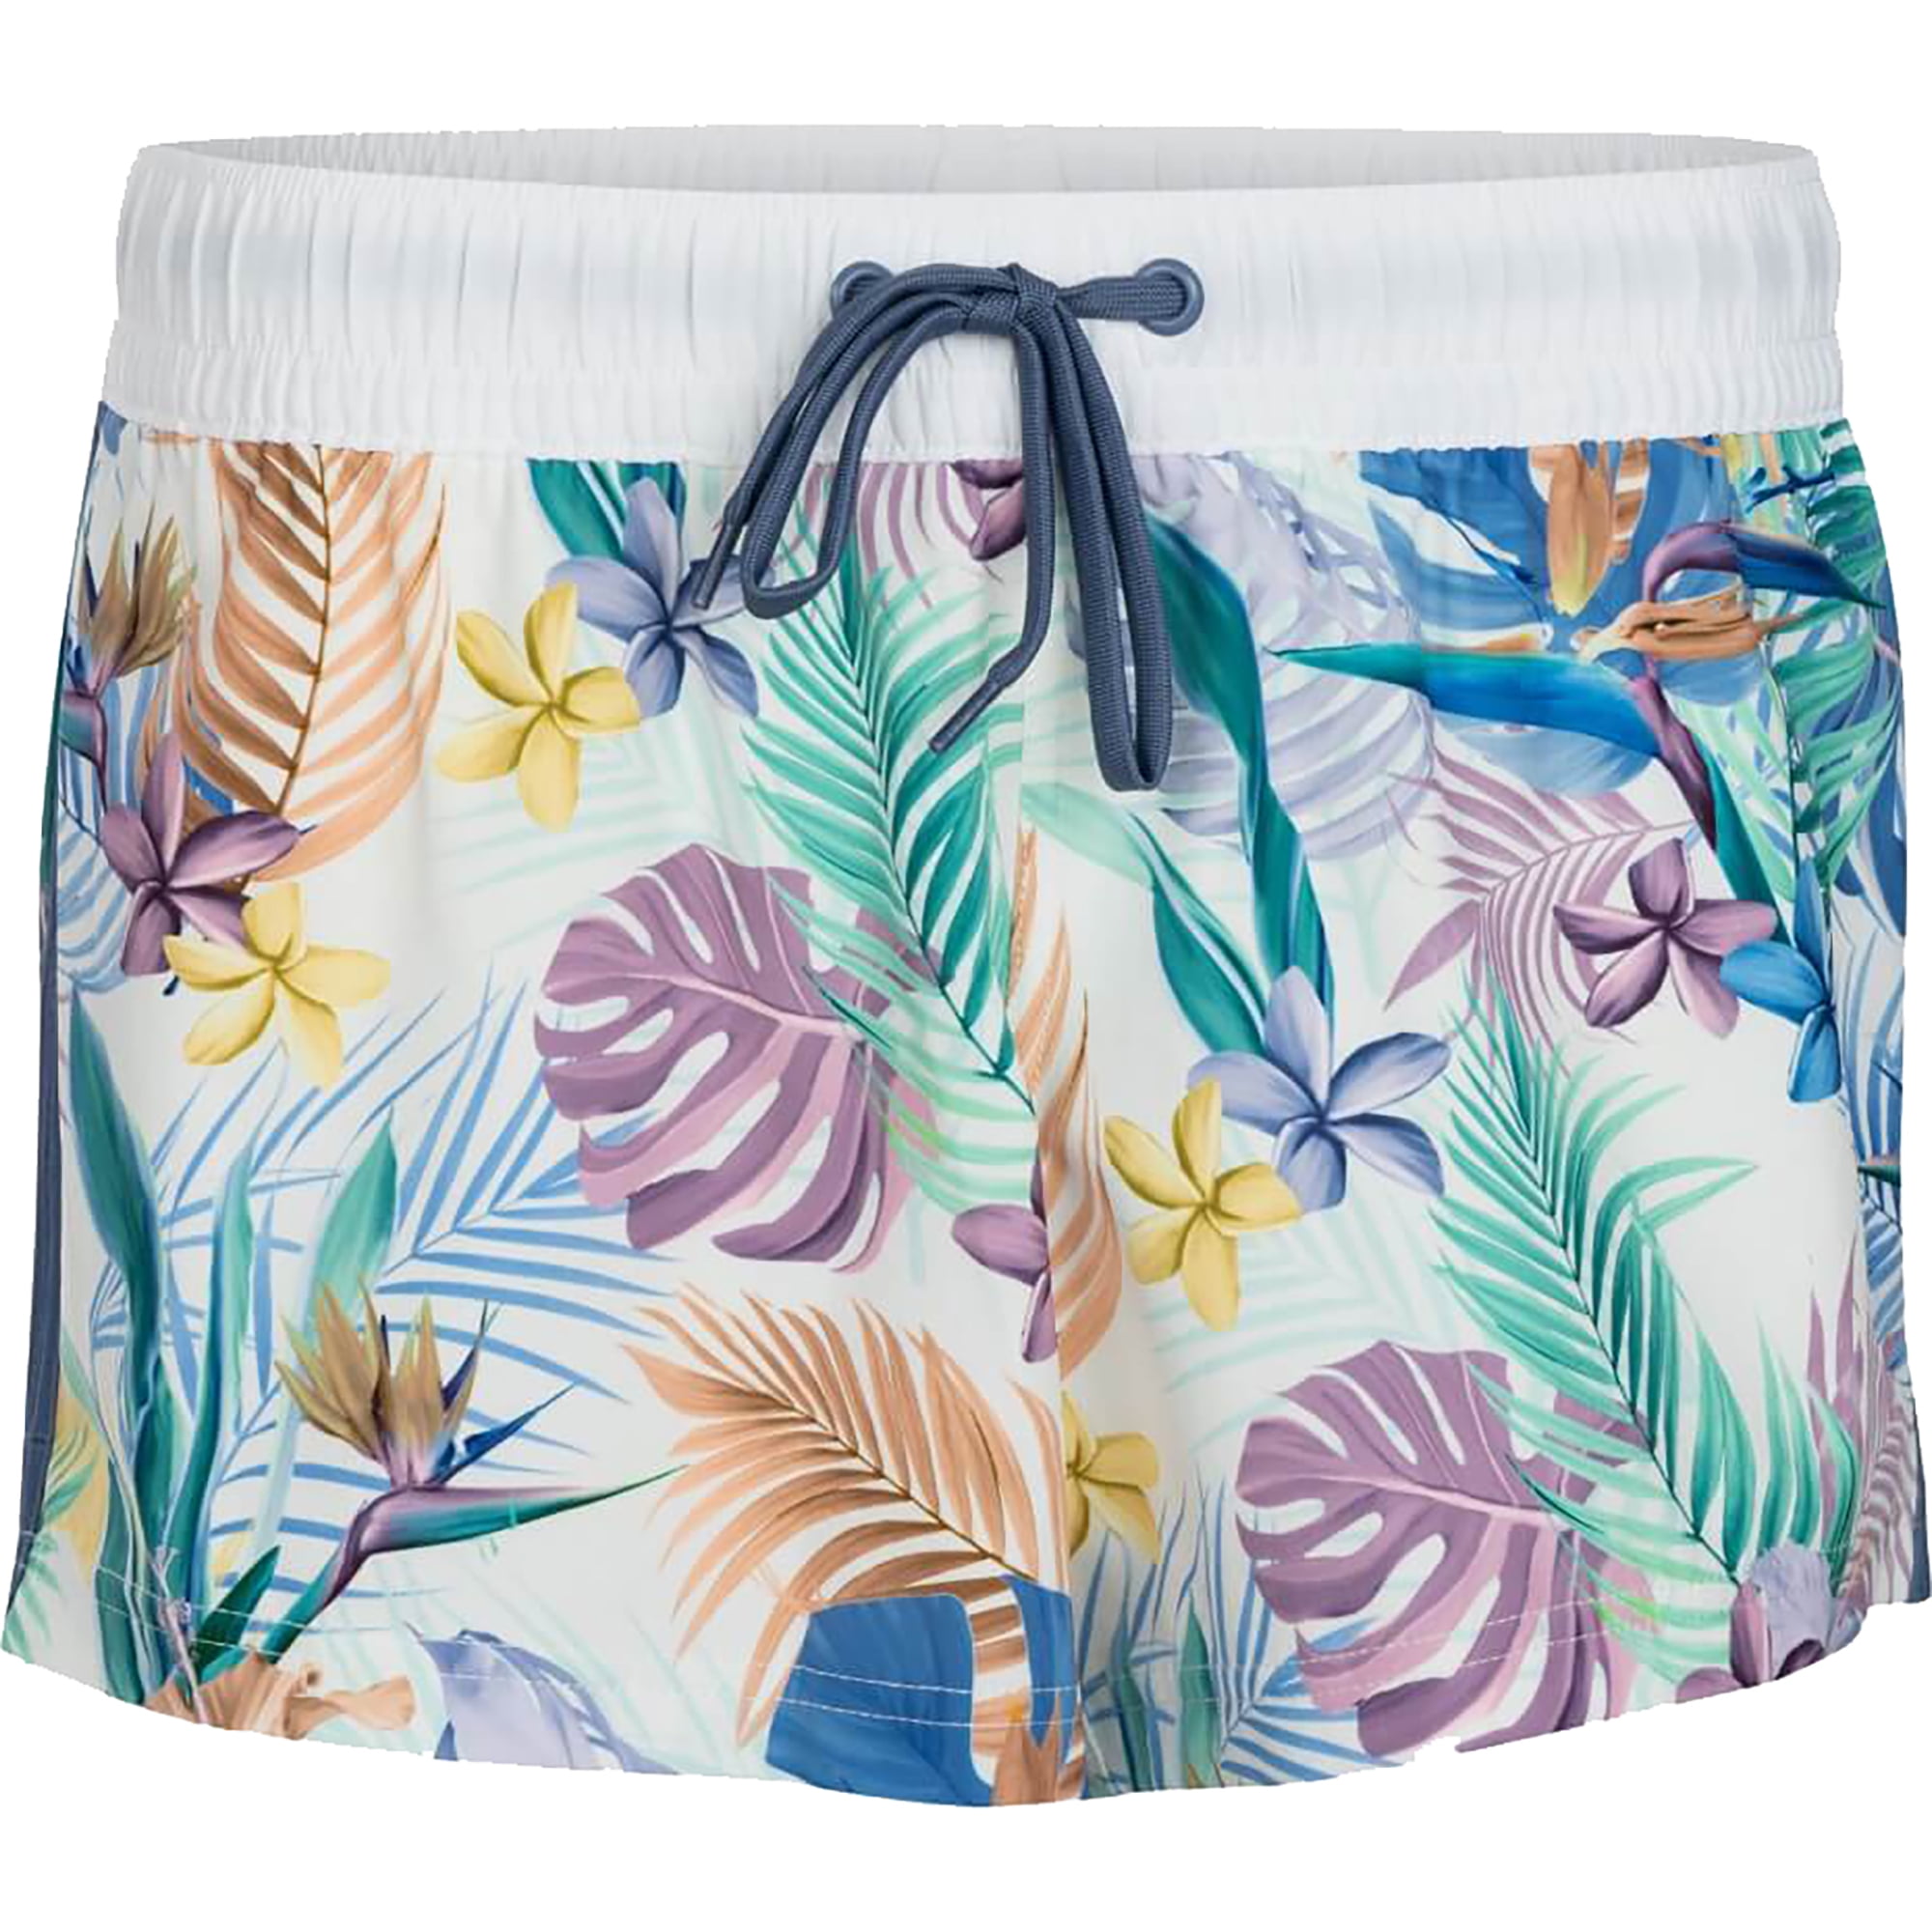 Reel Life Women's Marabella Tropical Explosion Sun Shorts - Small - Multi 